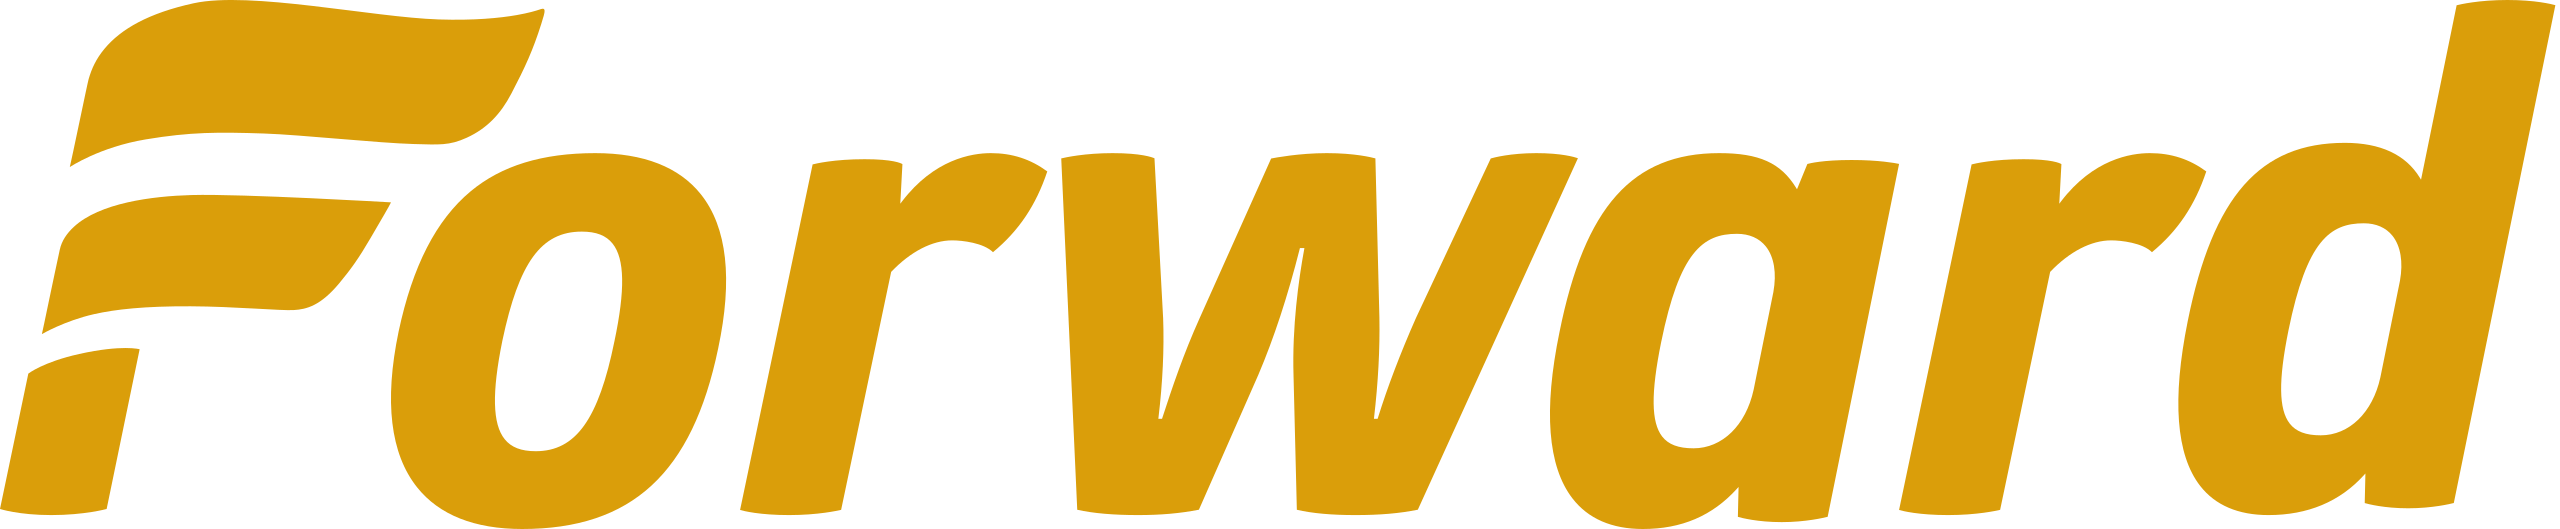 The Forward logo